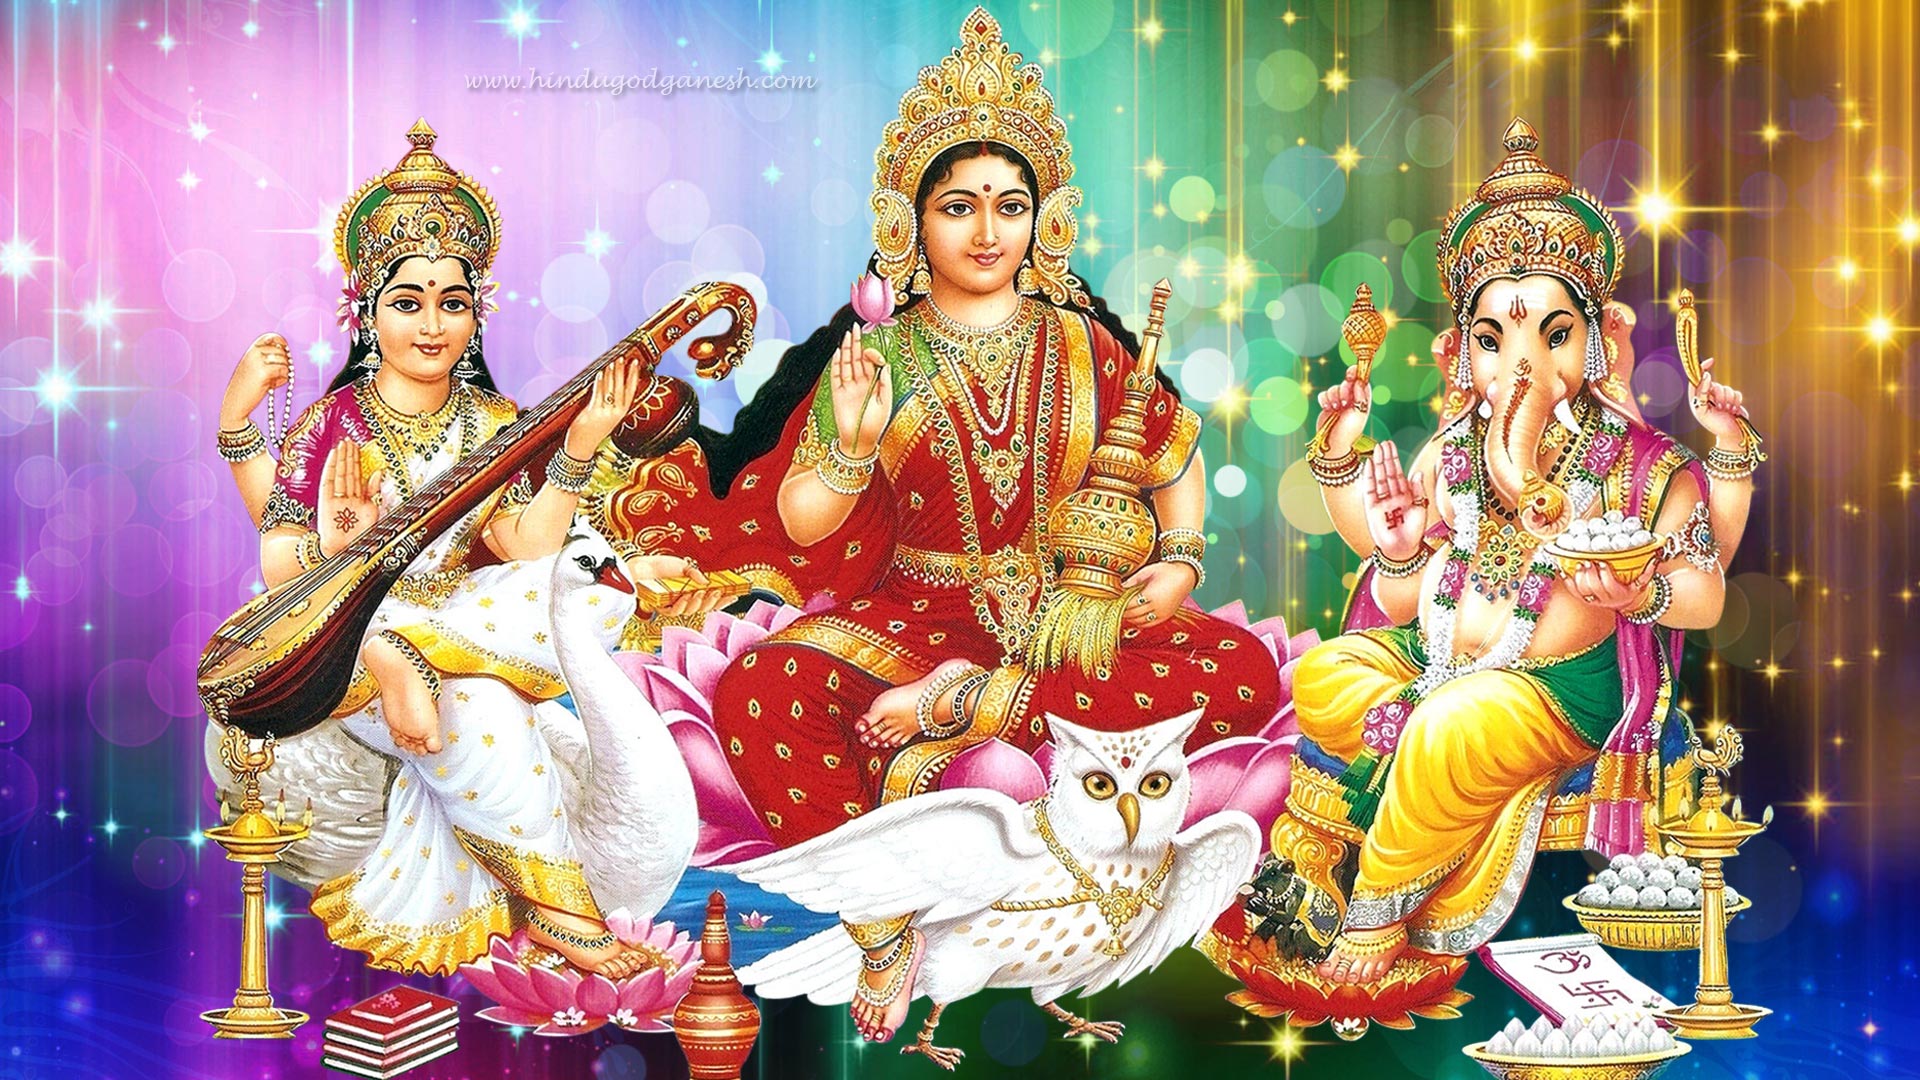 Goddess lakshmi images hd wallpaper free download